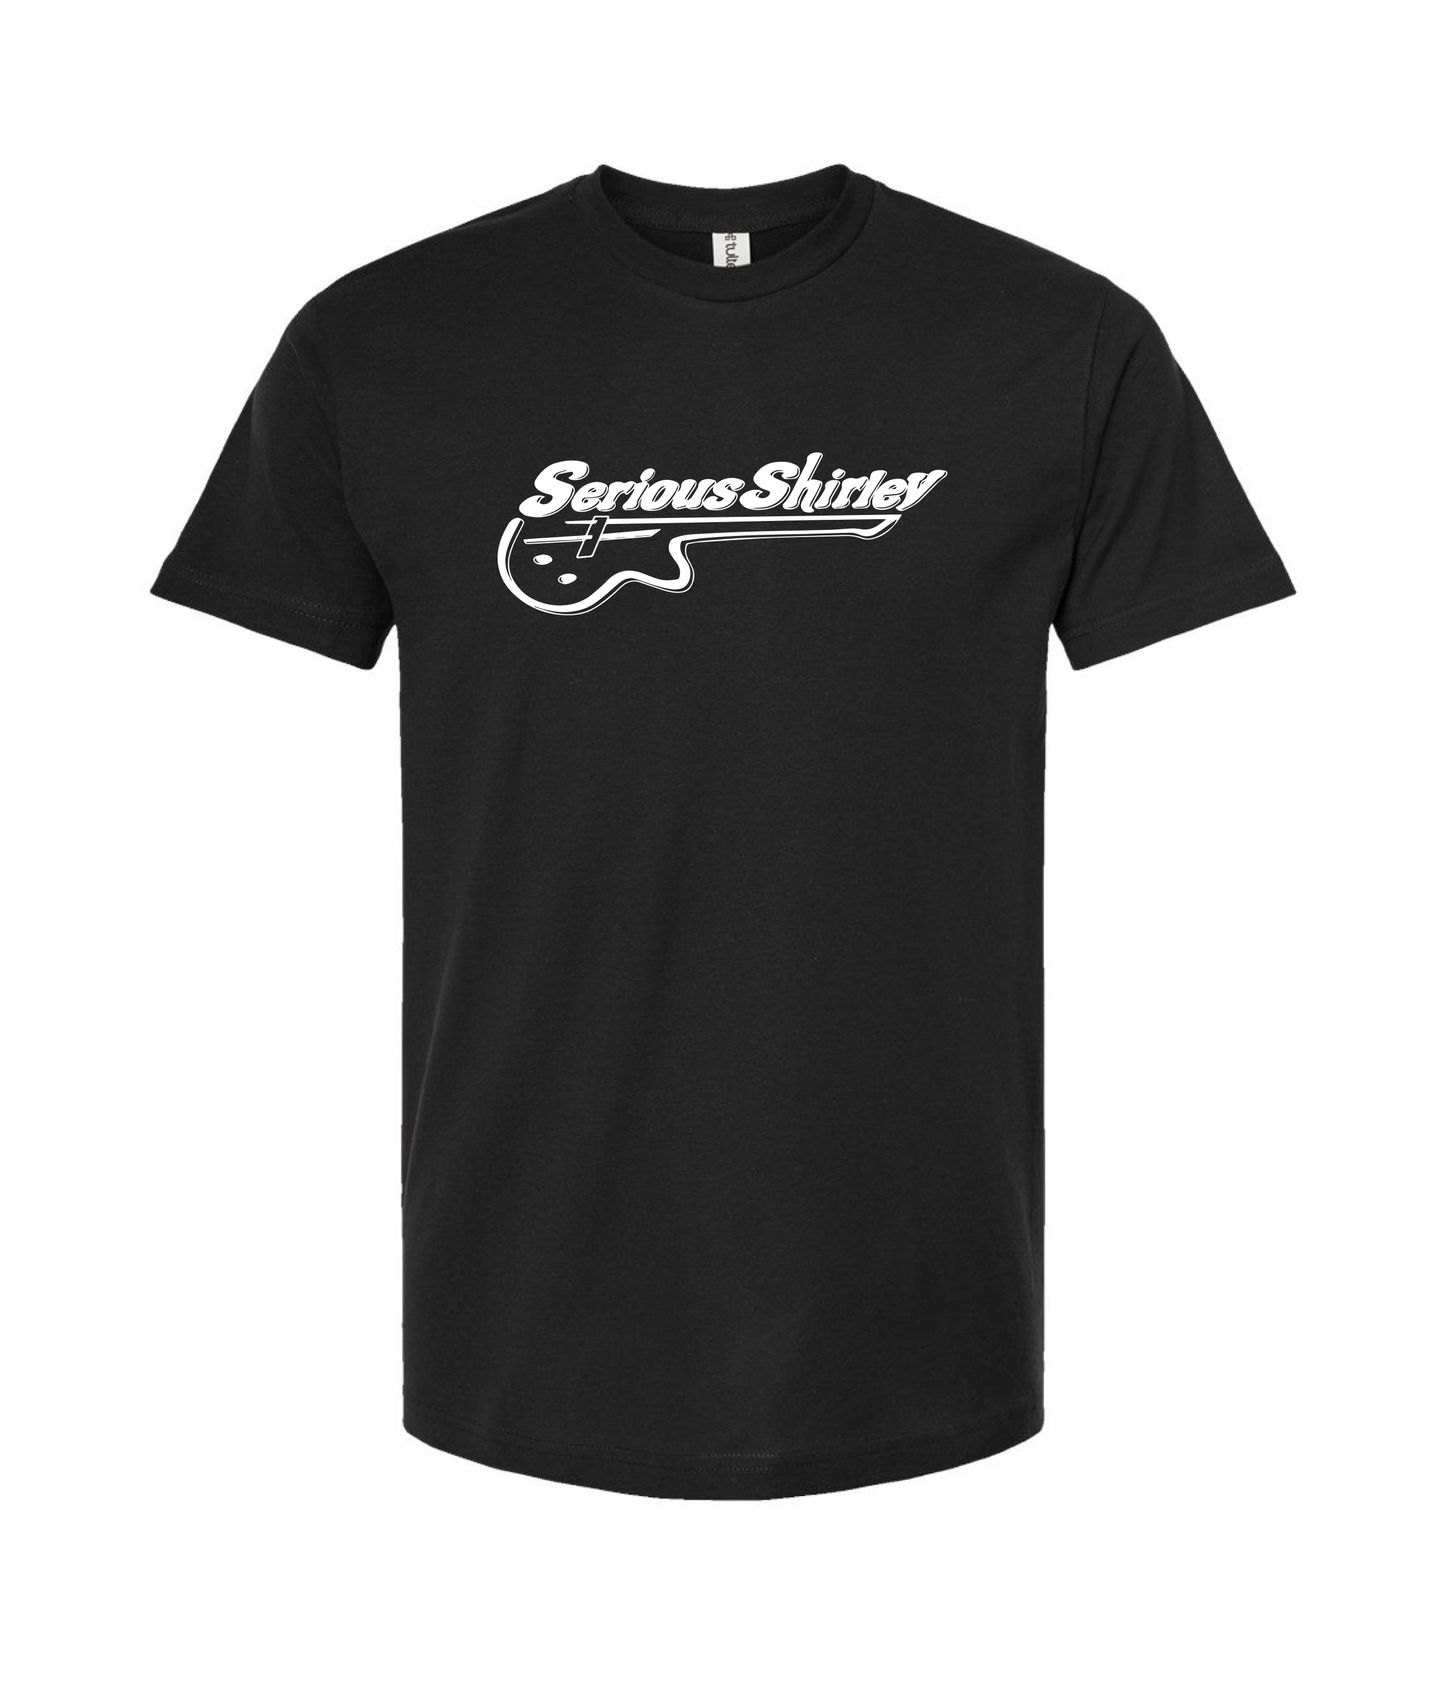 Serious Shirley - Guitar Logo - Black T-Shirt